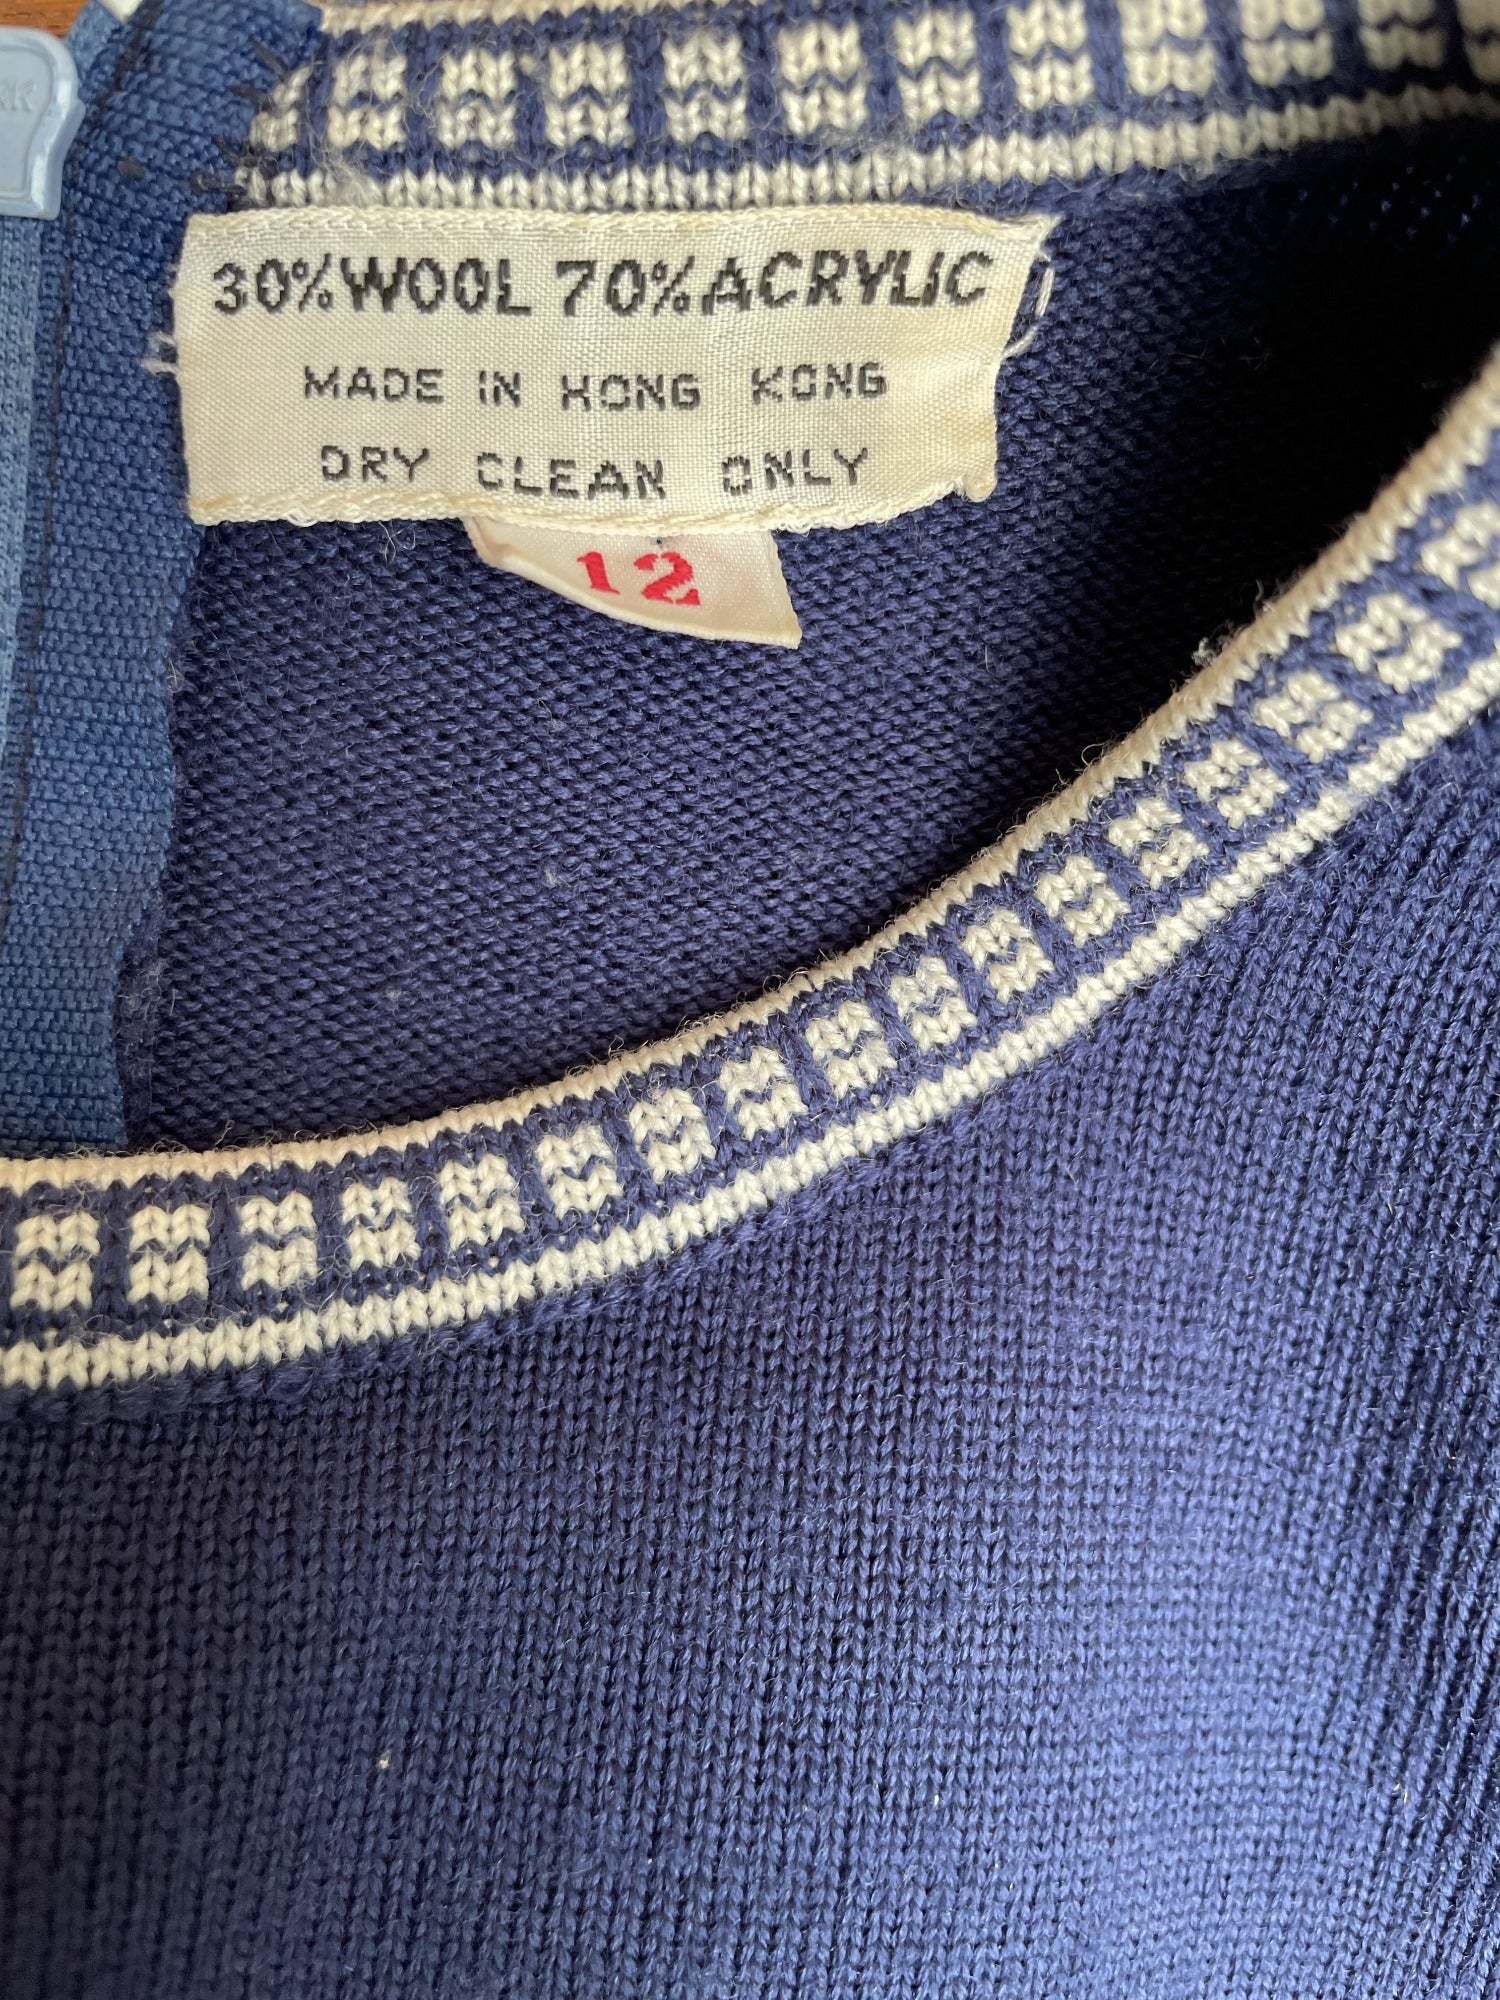 zip back  zip  wool  womens  vintage  Urban Village Vintage  top  summer  retro  Navy  MOD  embroidered pattern  Embroidered  denim  blue  back zip  8  60s  1960s